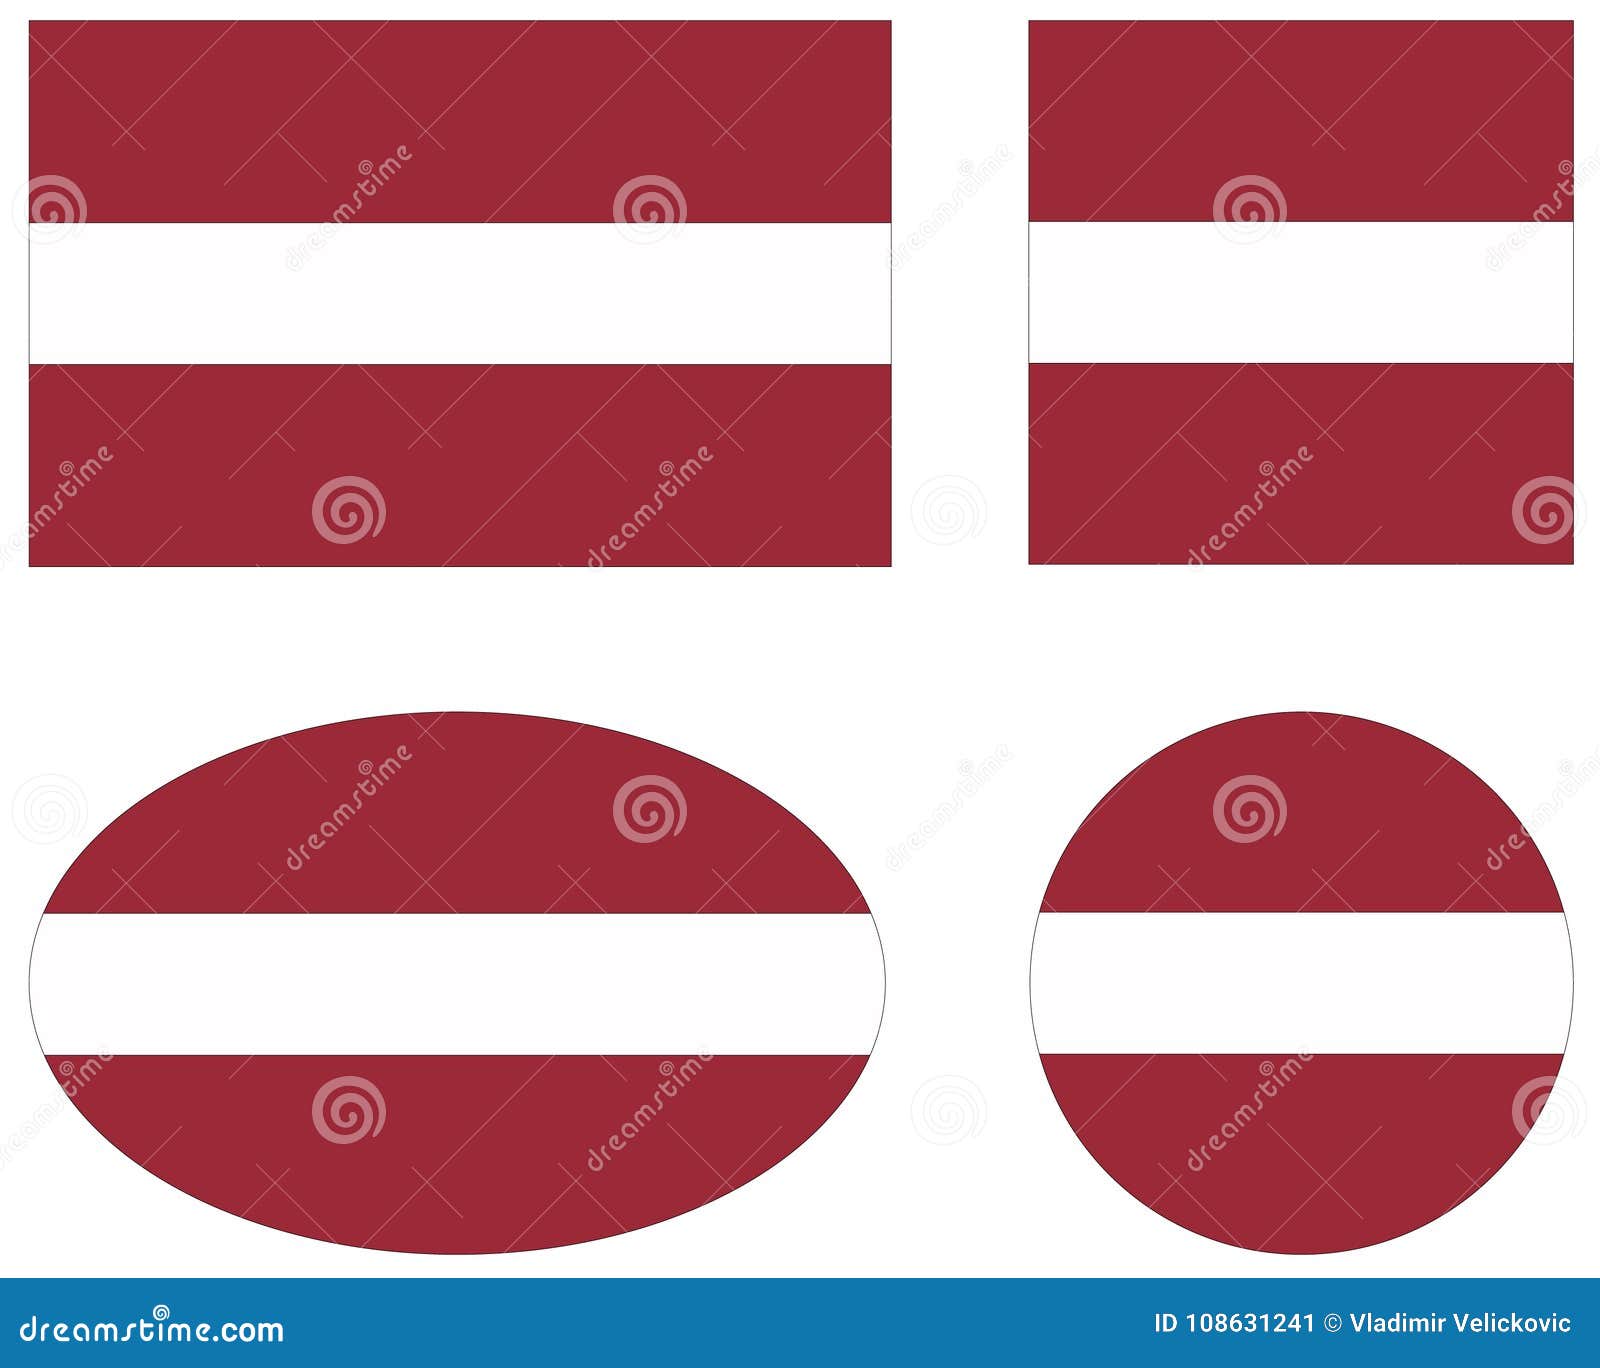 Vector Country Flag of Latvia - Circle